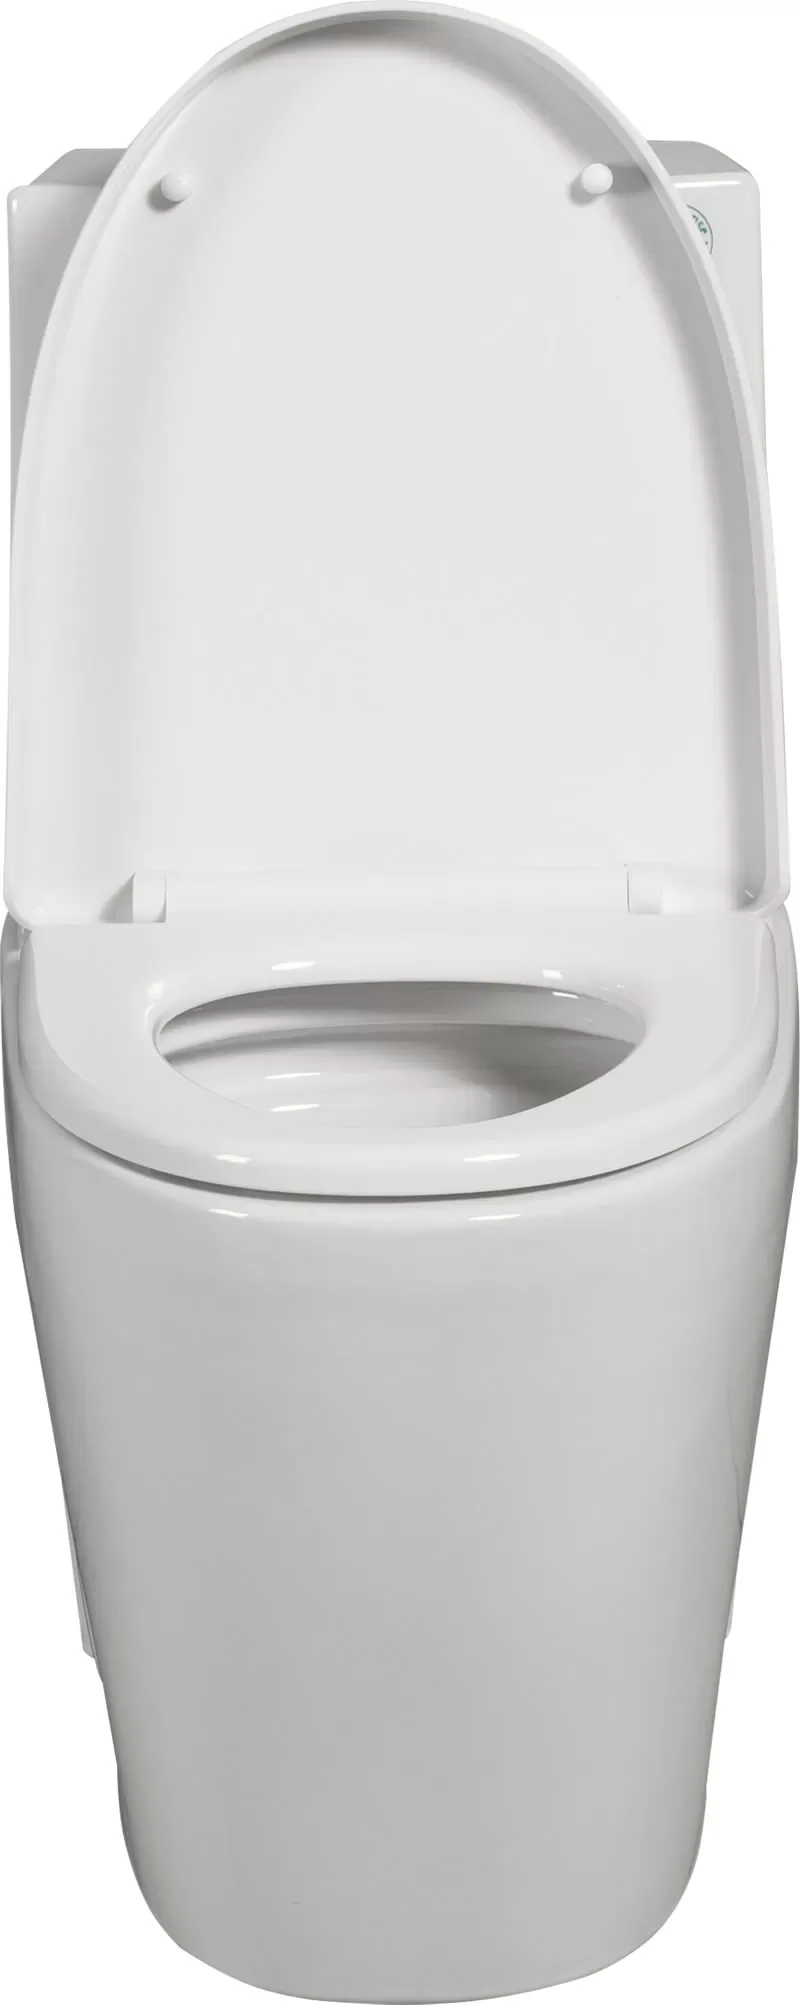 1.11.6 Gpf Dual Flush 1 Piece Elongated Toilet With Soft Close Seat Gloss White, Water Saving, Modern, Stylish Design 23t01 Gw 1